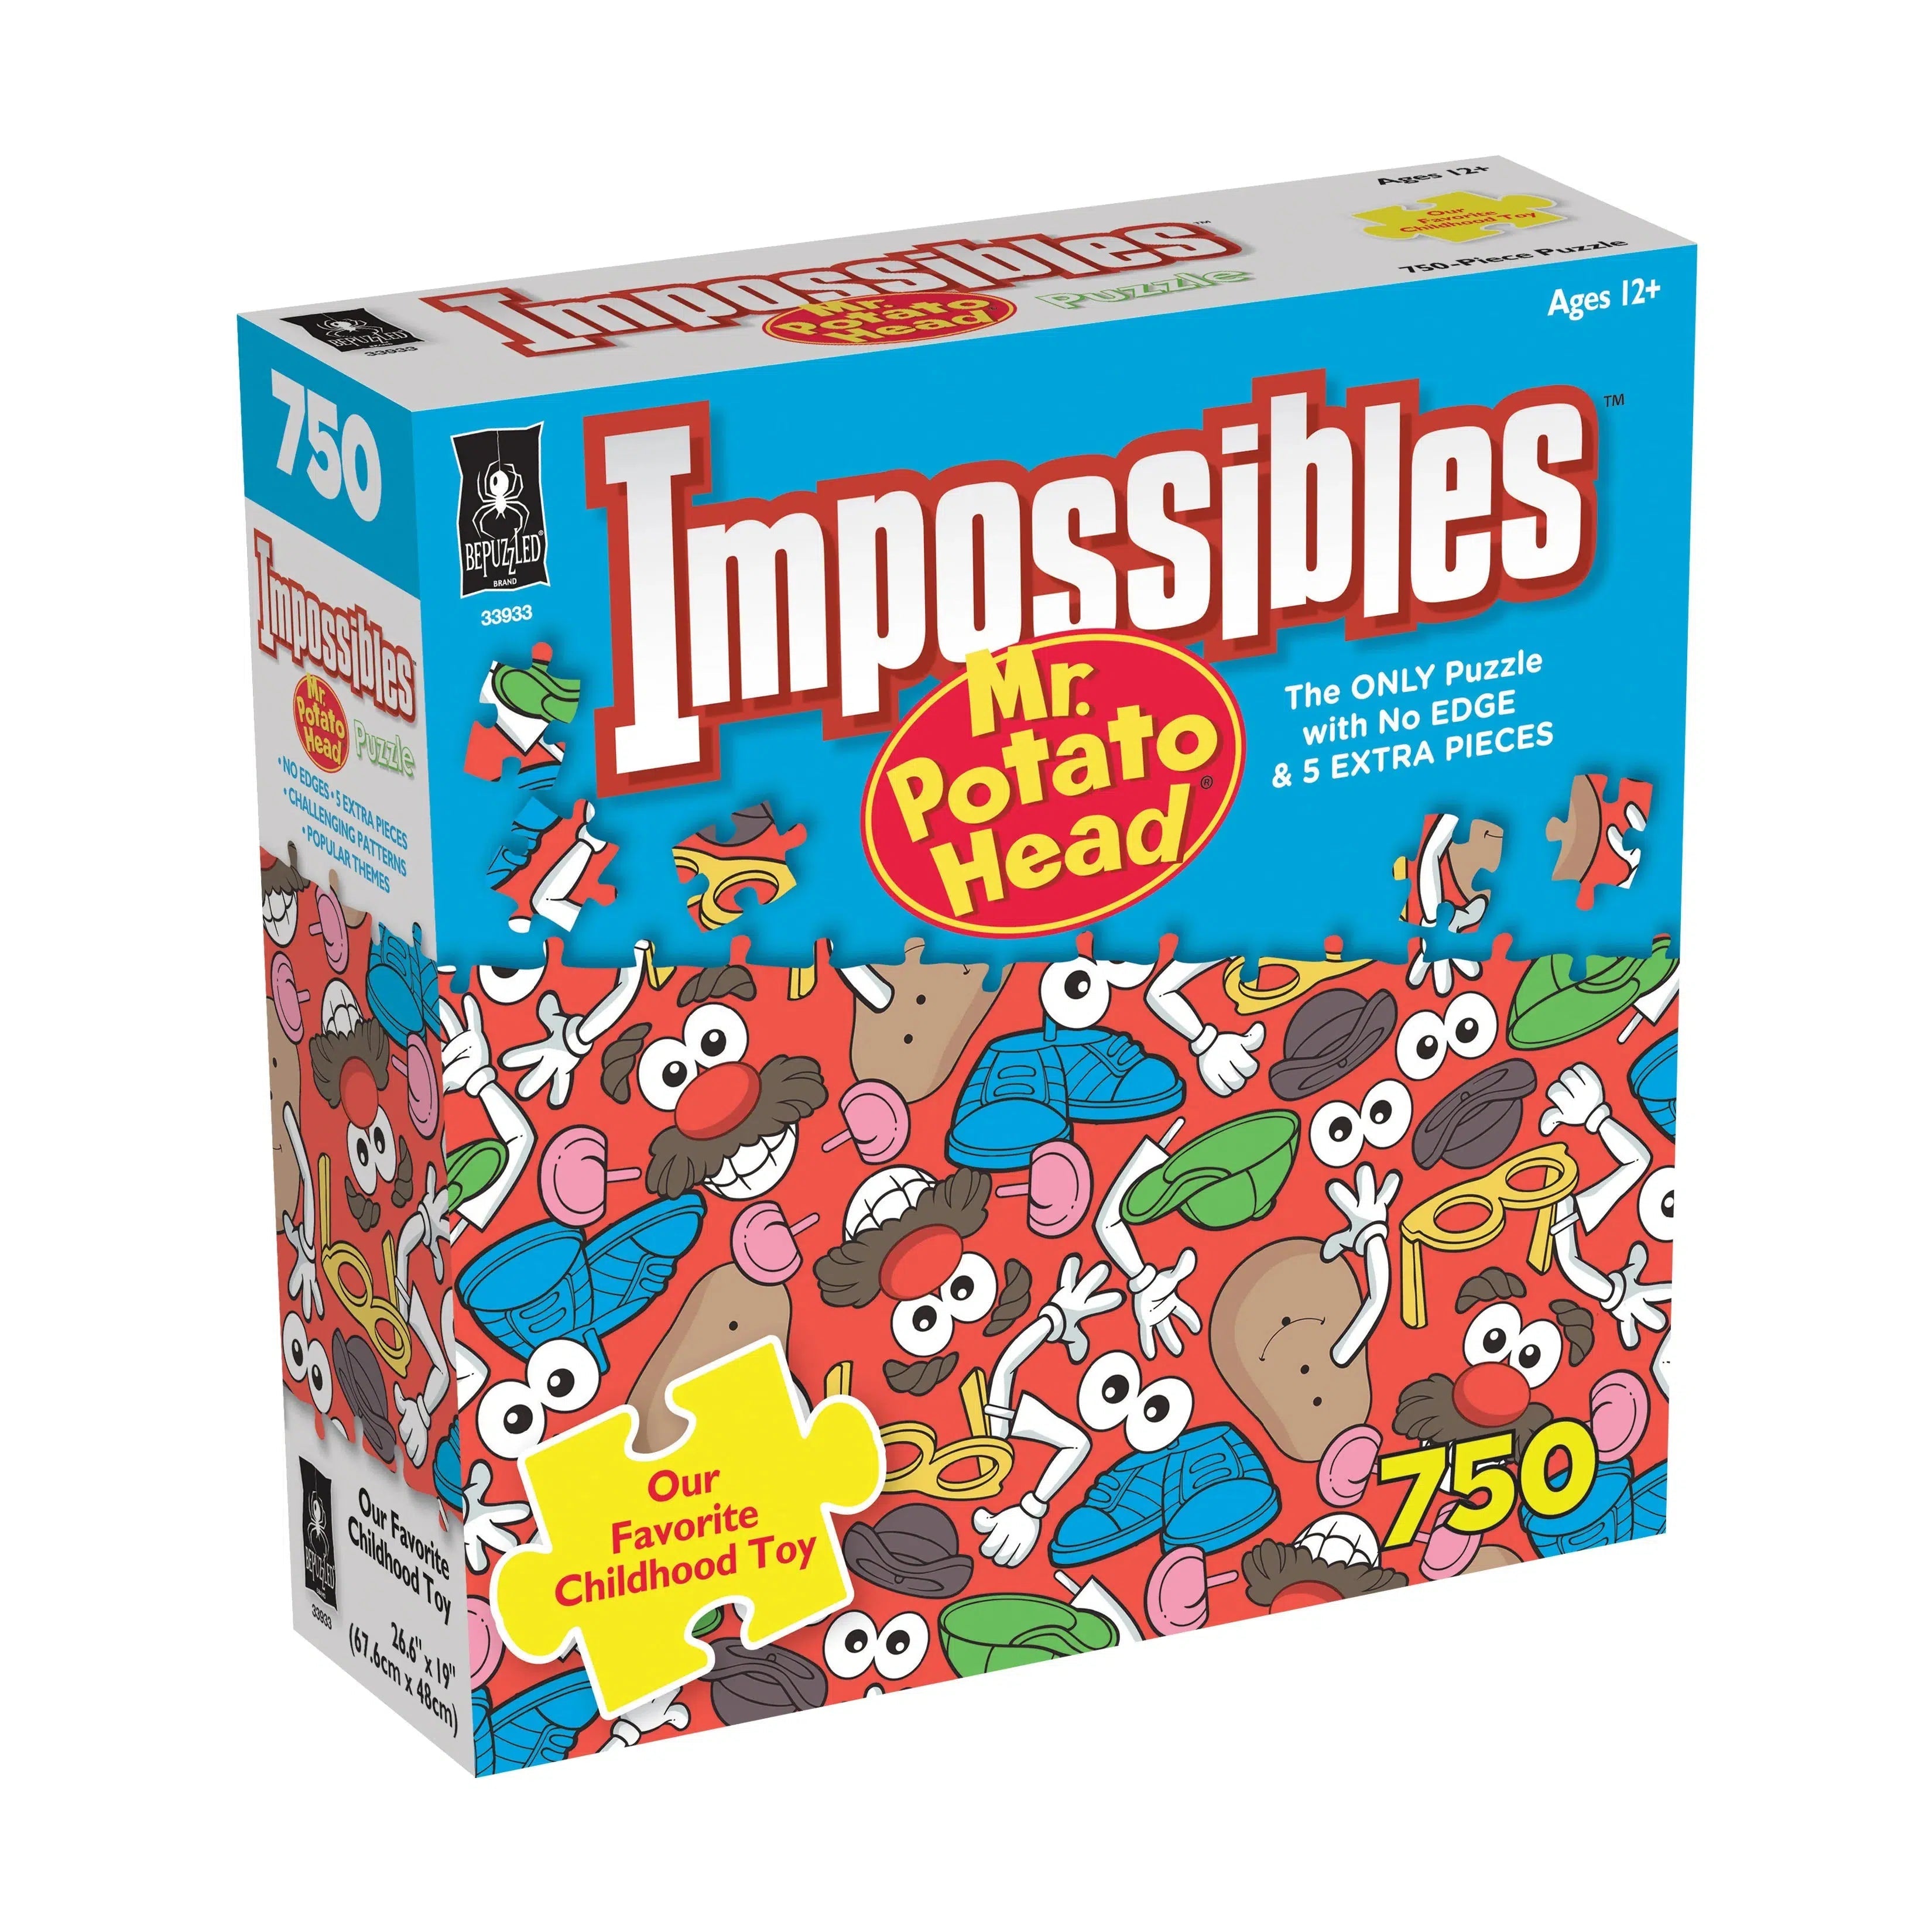 University Games-Impossibles Mr. Potato Head 750 Piece Puzzle-33933-Legacy Toys